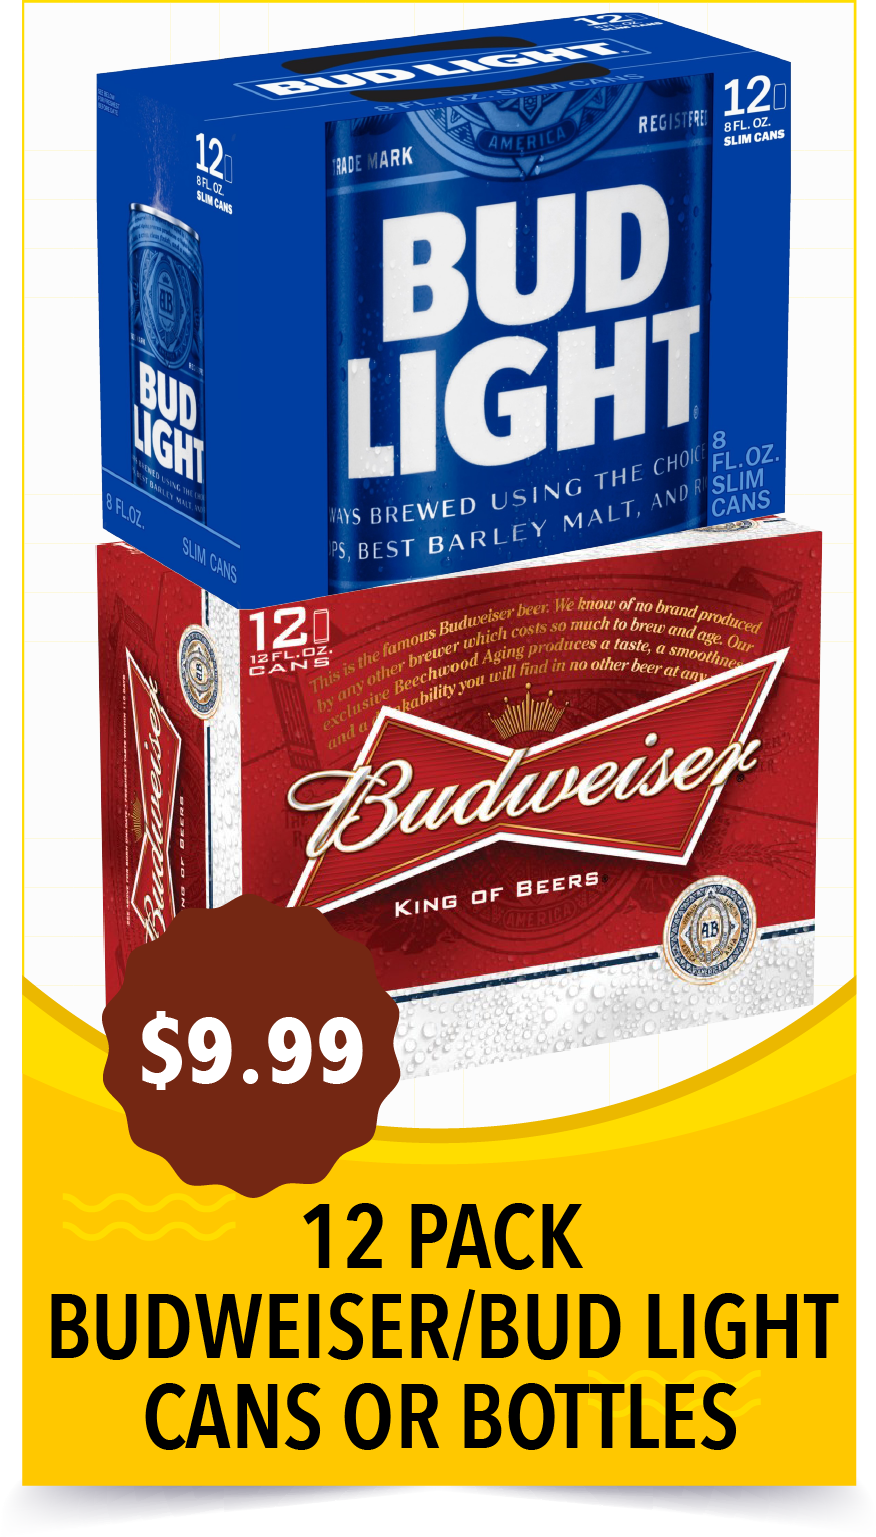 12 Pack Budweiser/Bud Light